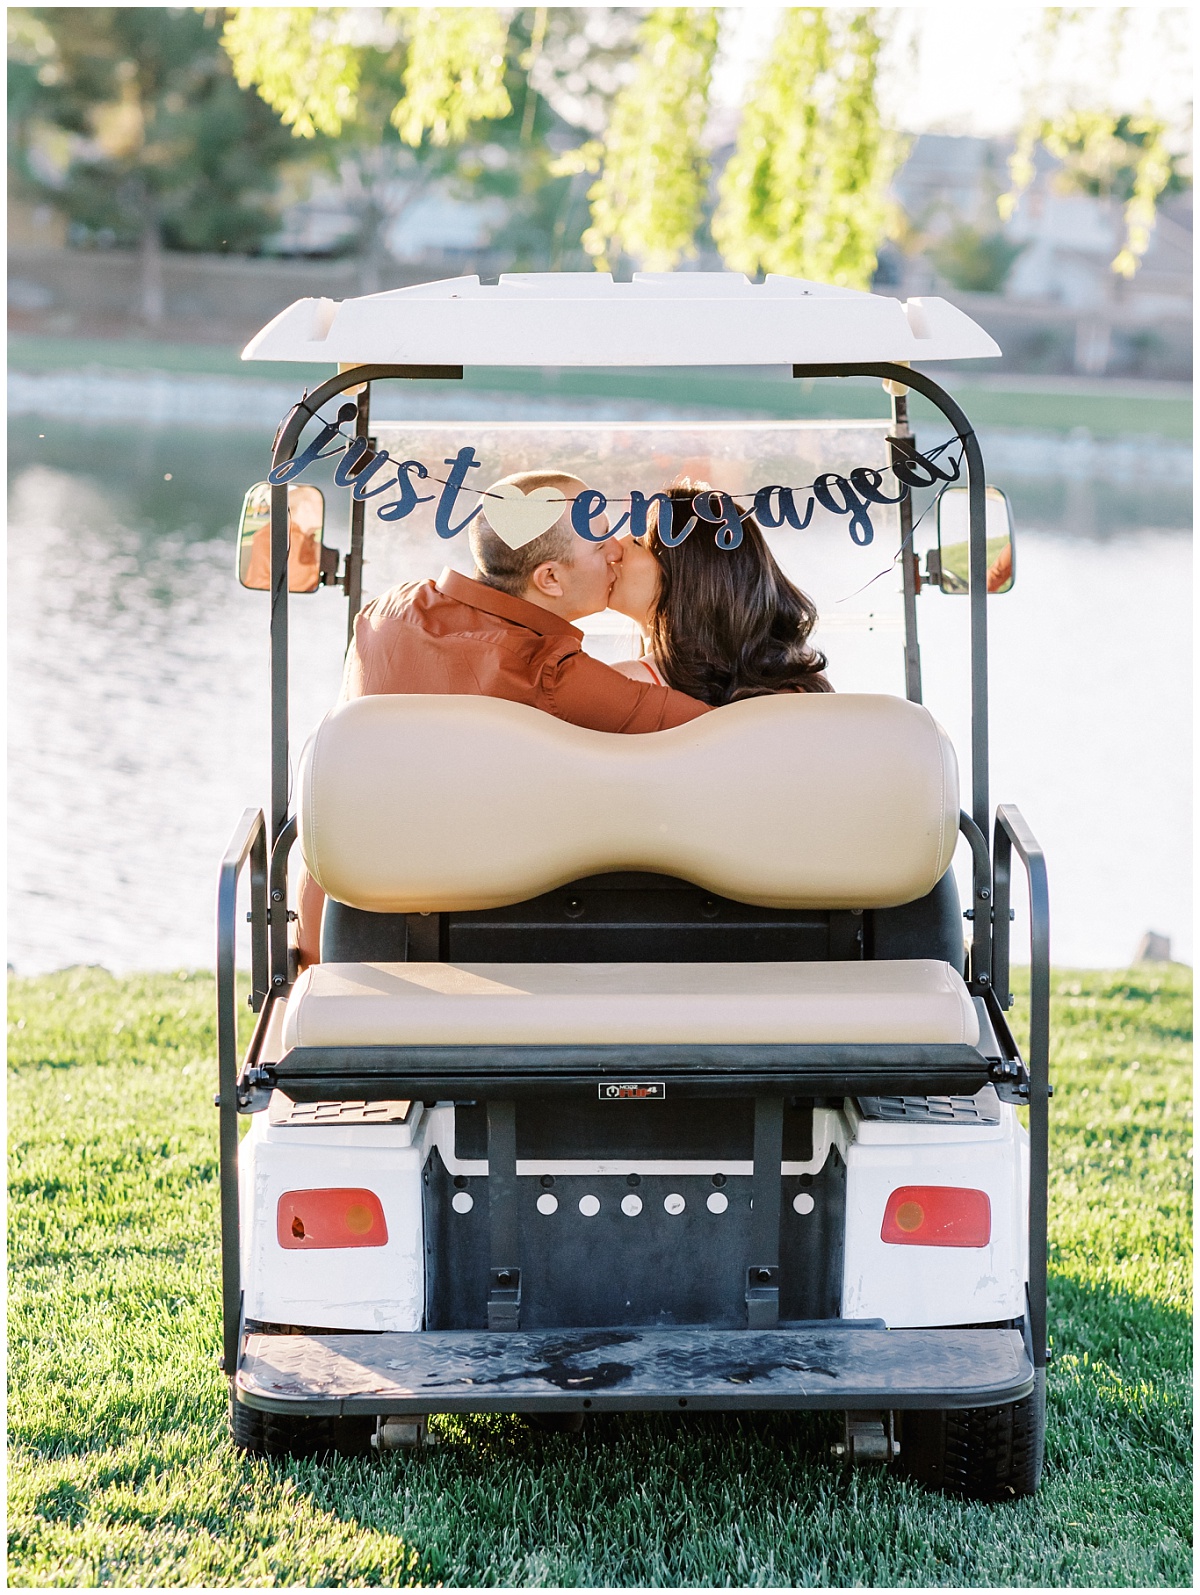 Engagement Photo on a Golf Cart